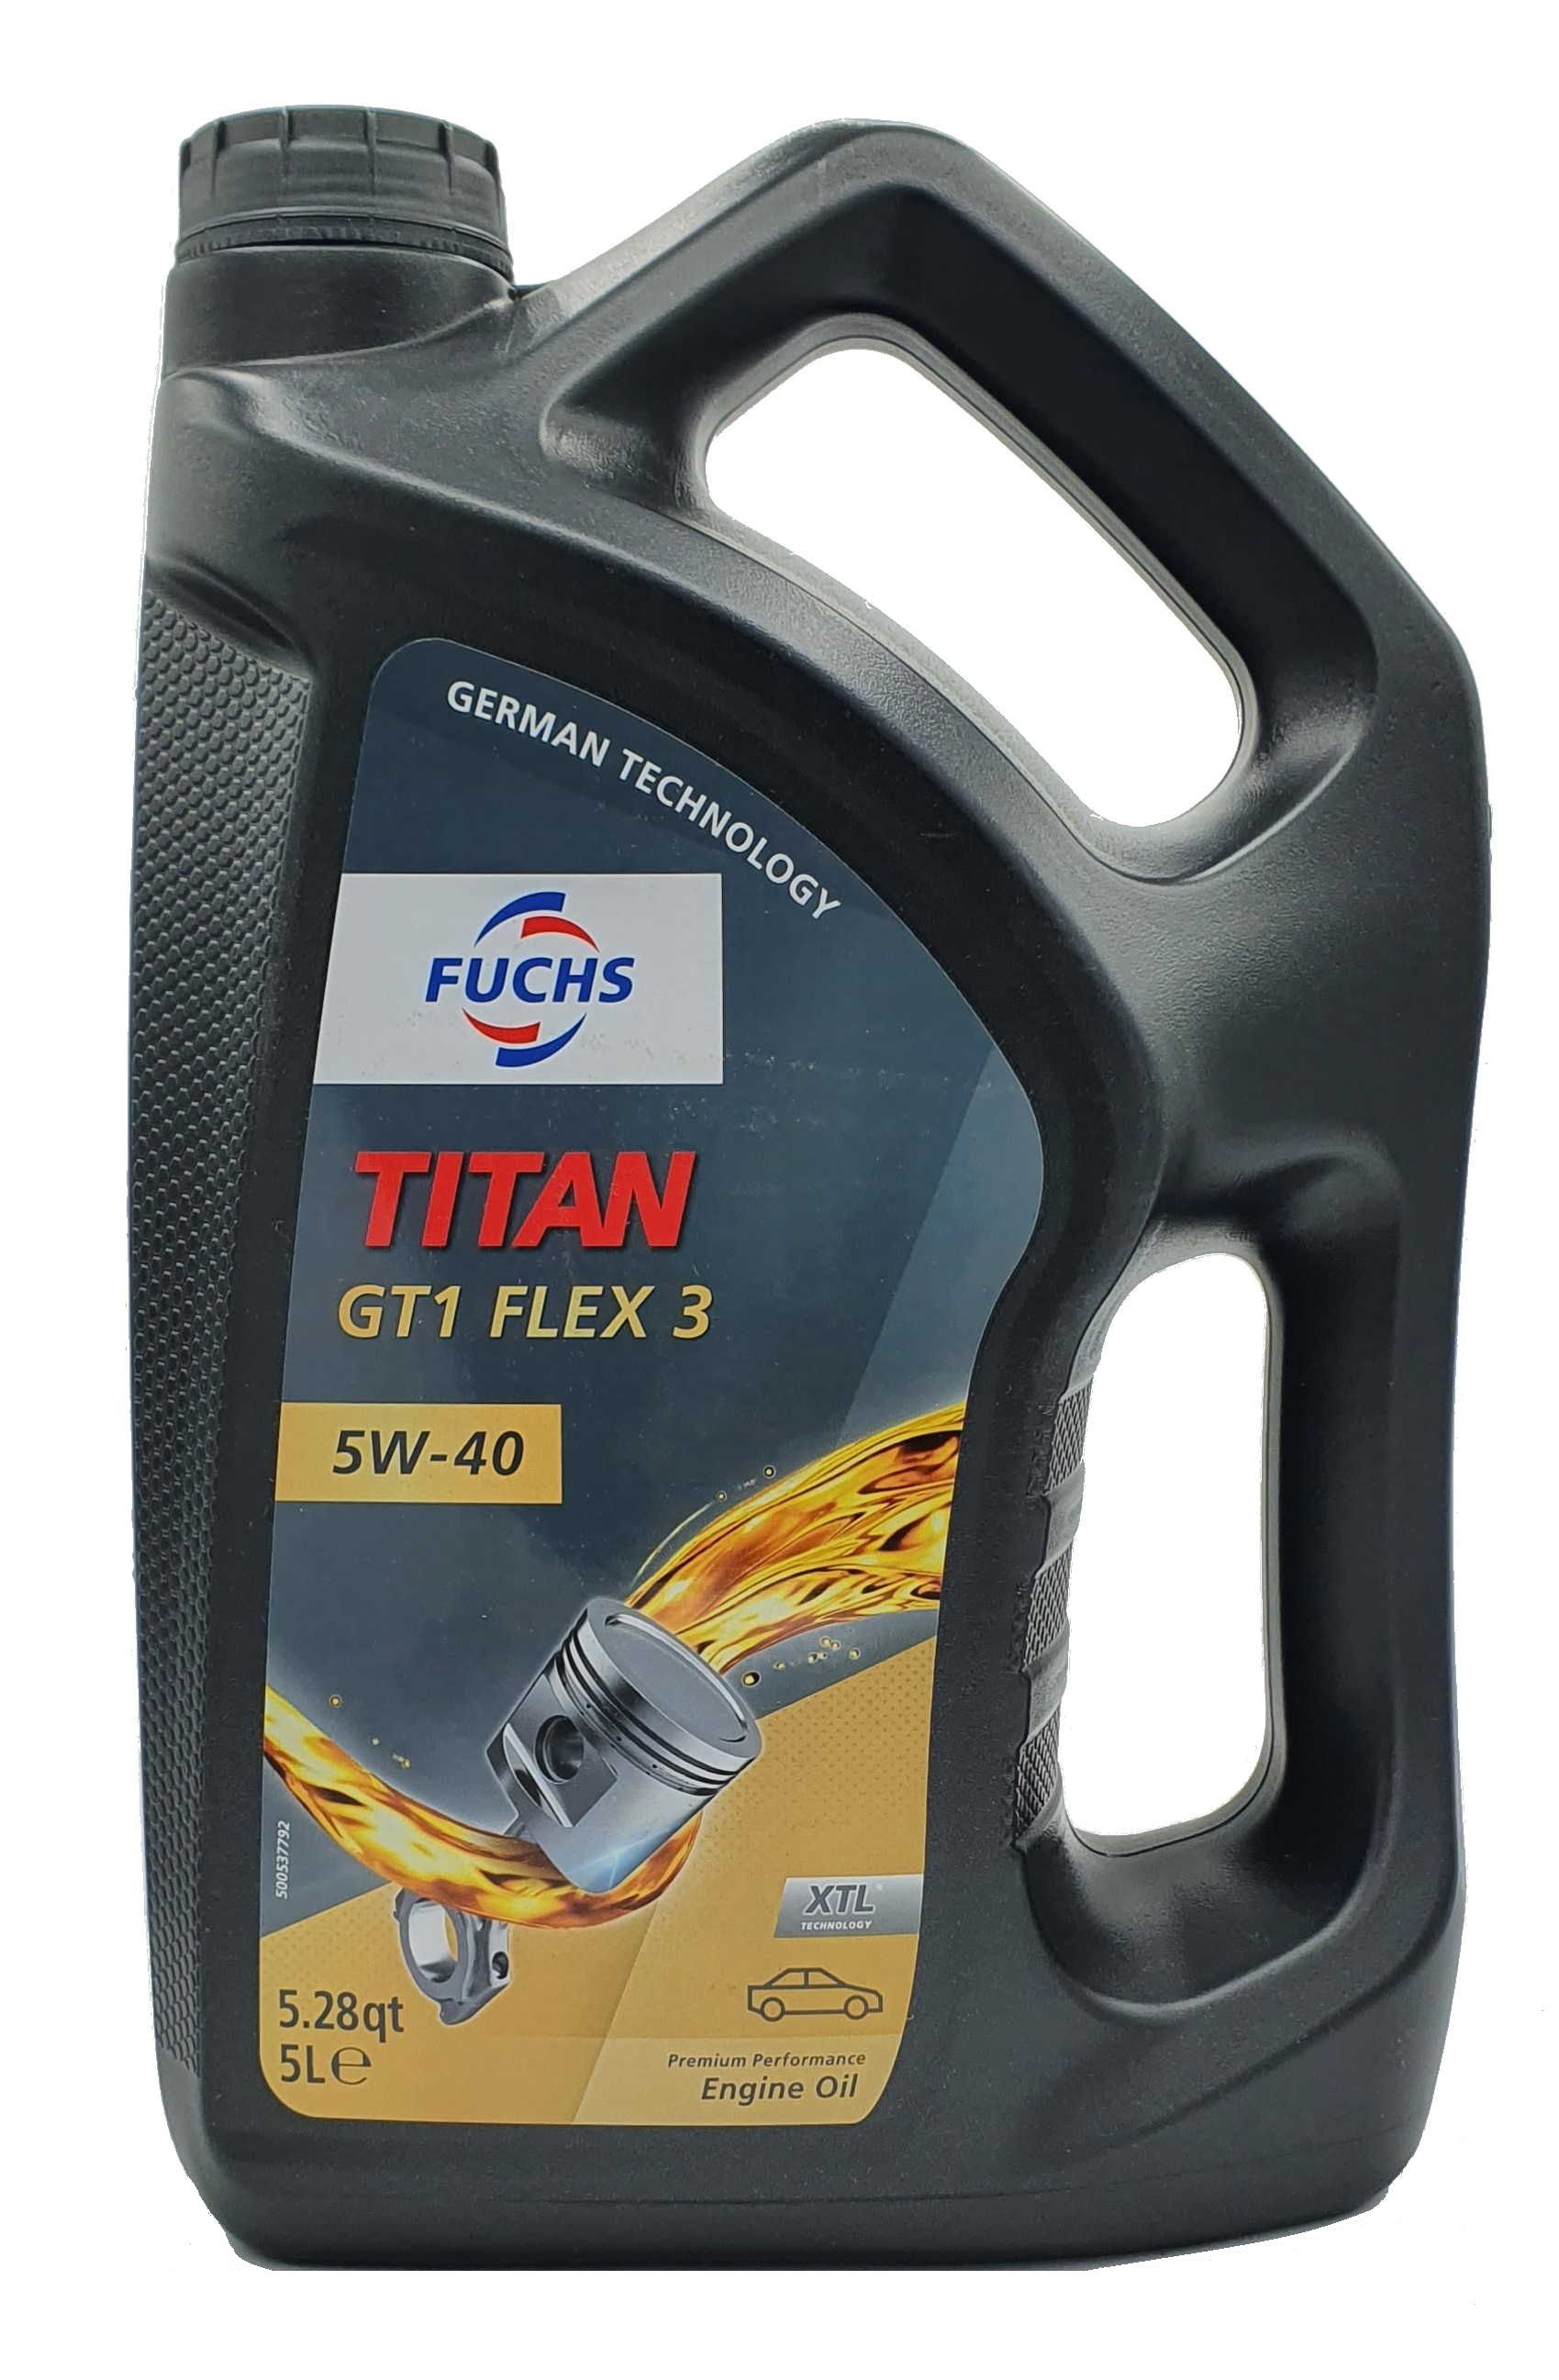 Fuchs Titan GT1 Flex 3 5W-40 5 Liter